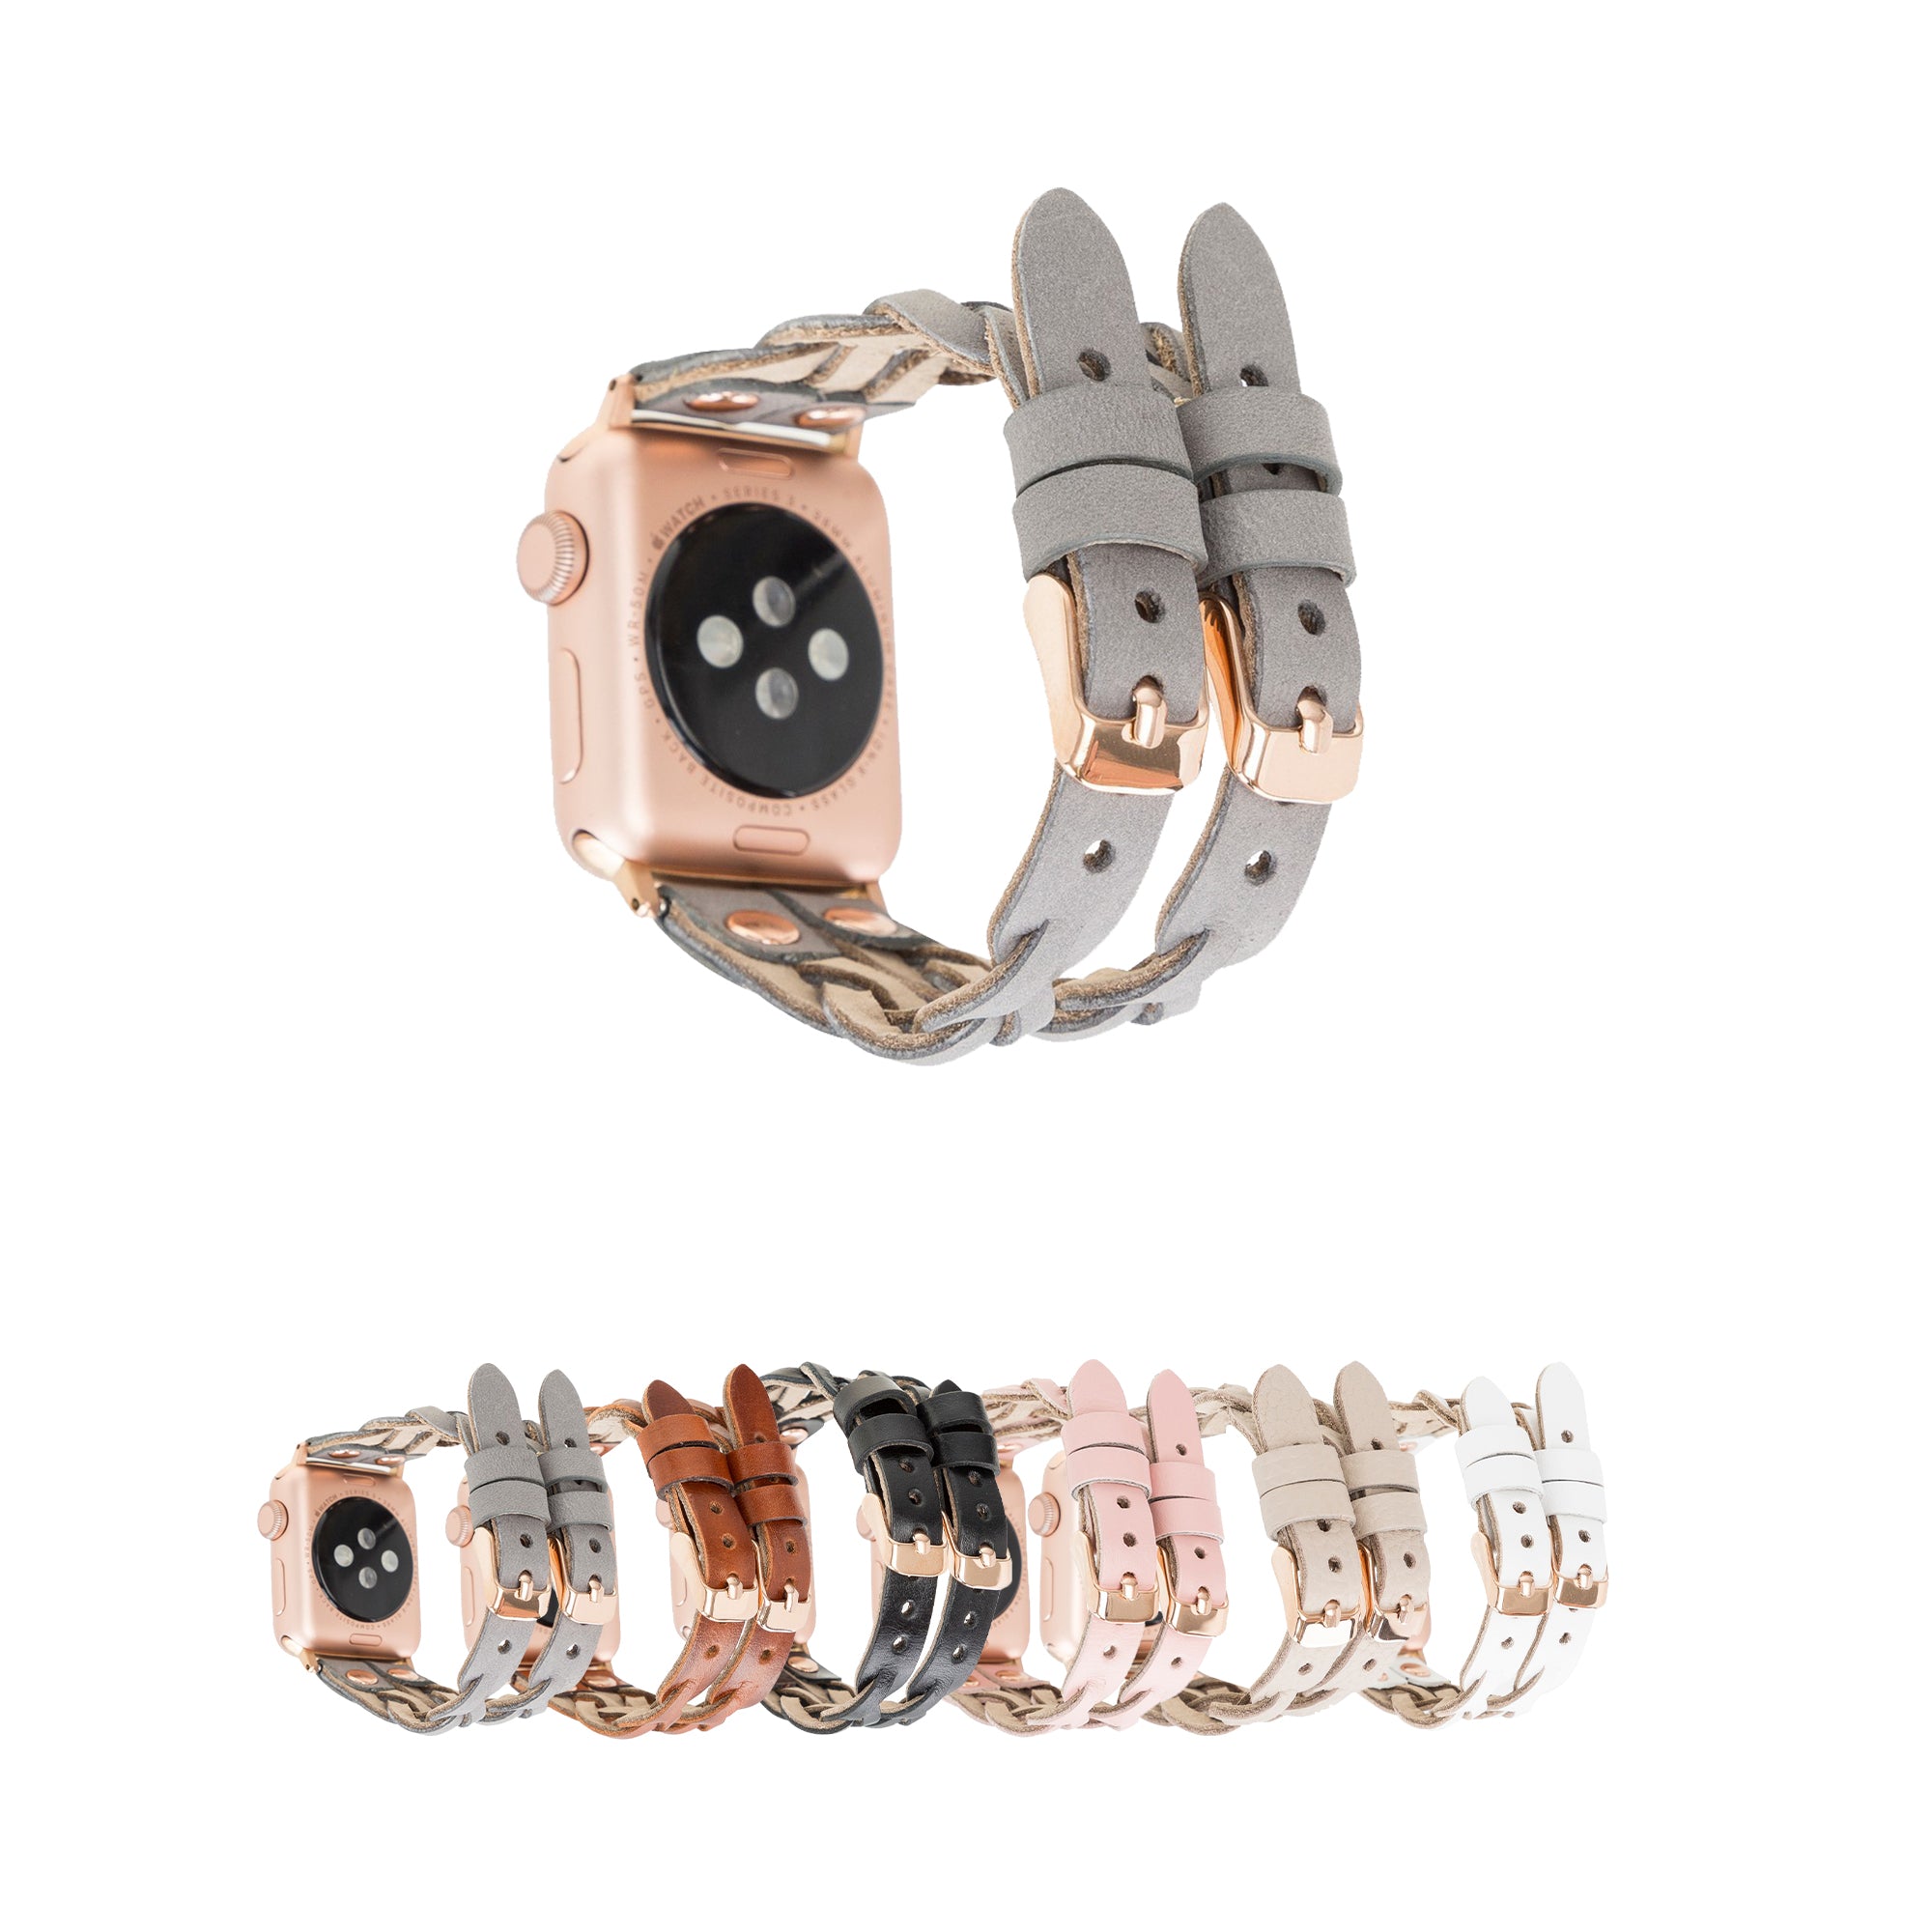 DelfiCase Sheffield-York Double Apple Watch Band for Apple Watch & Fitbit/Sense 42